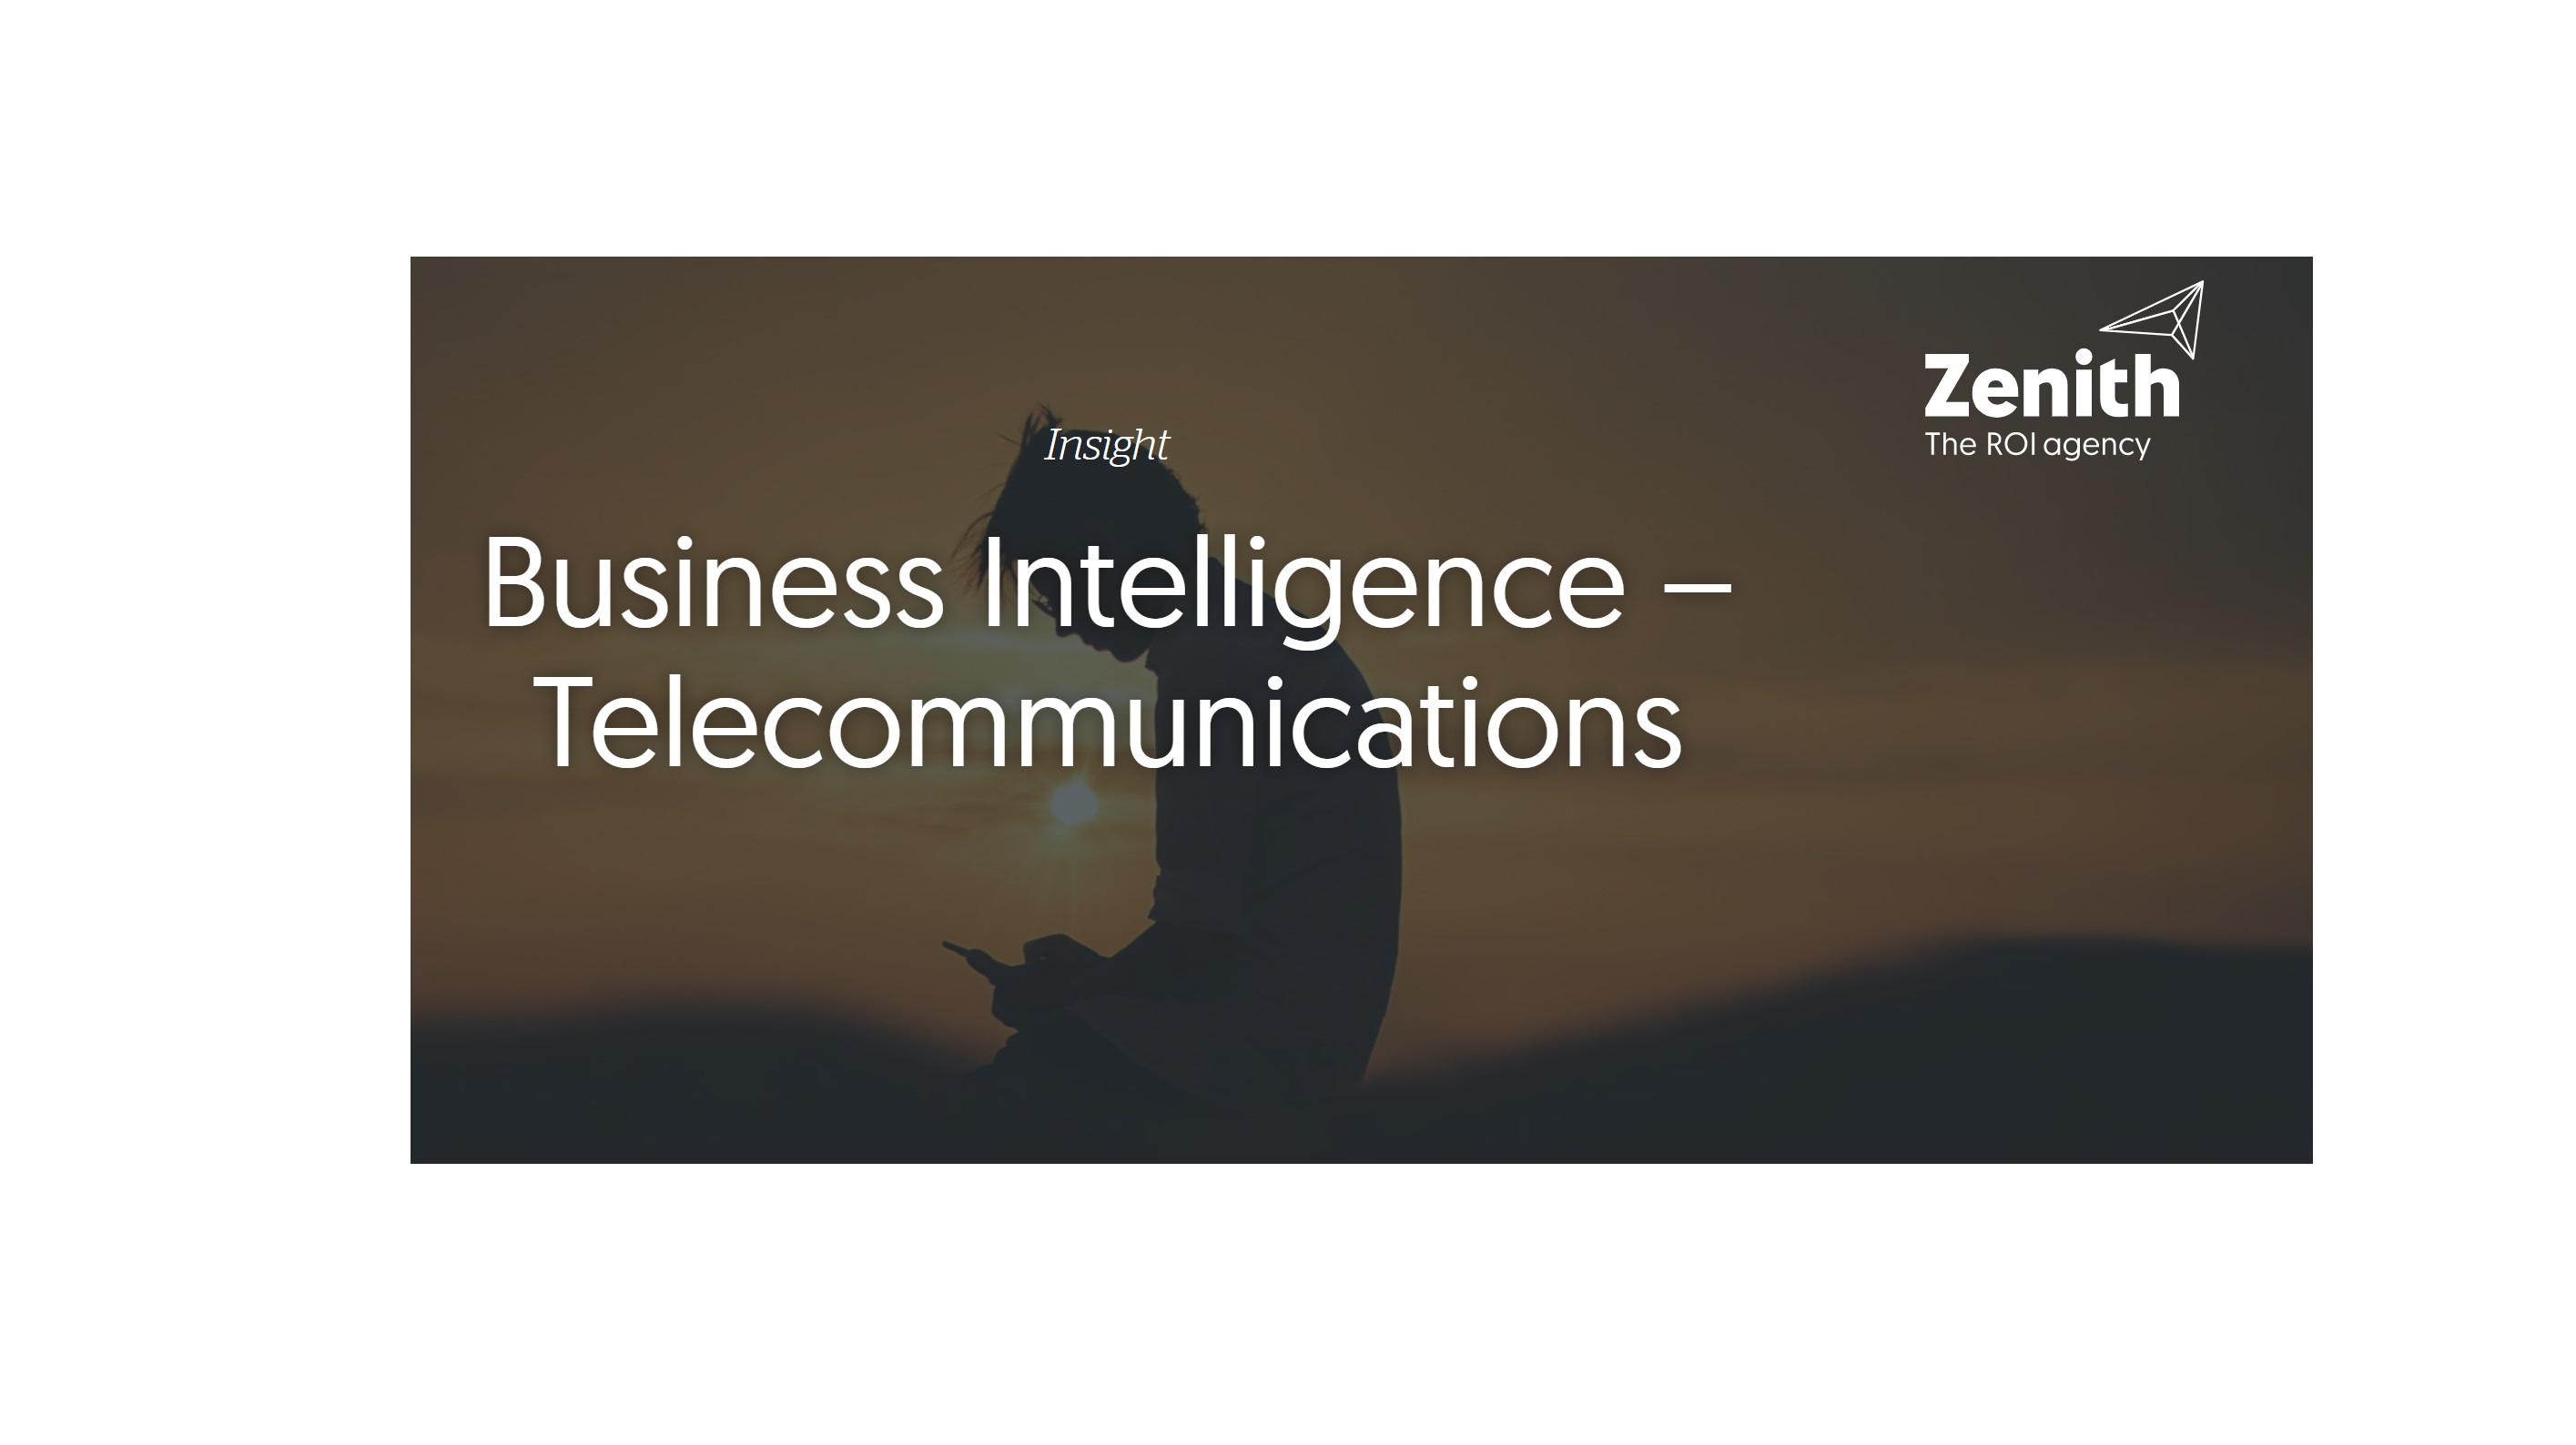 Business Intelligence , Telecommunications, zenith, programapublicidad